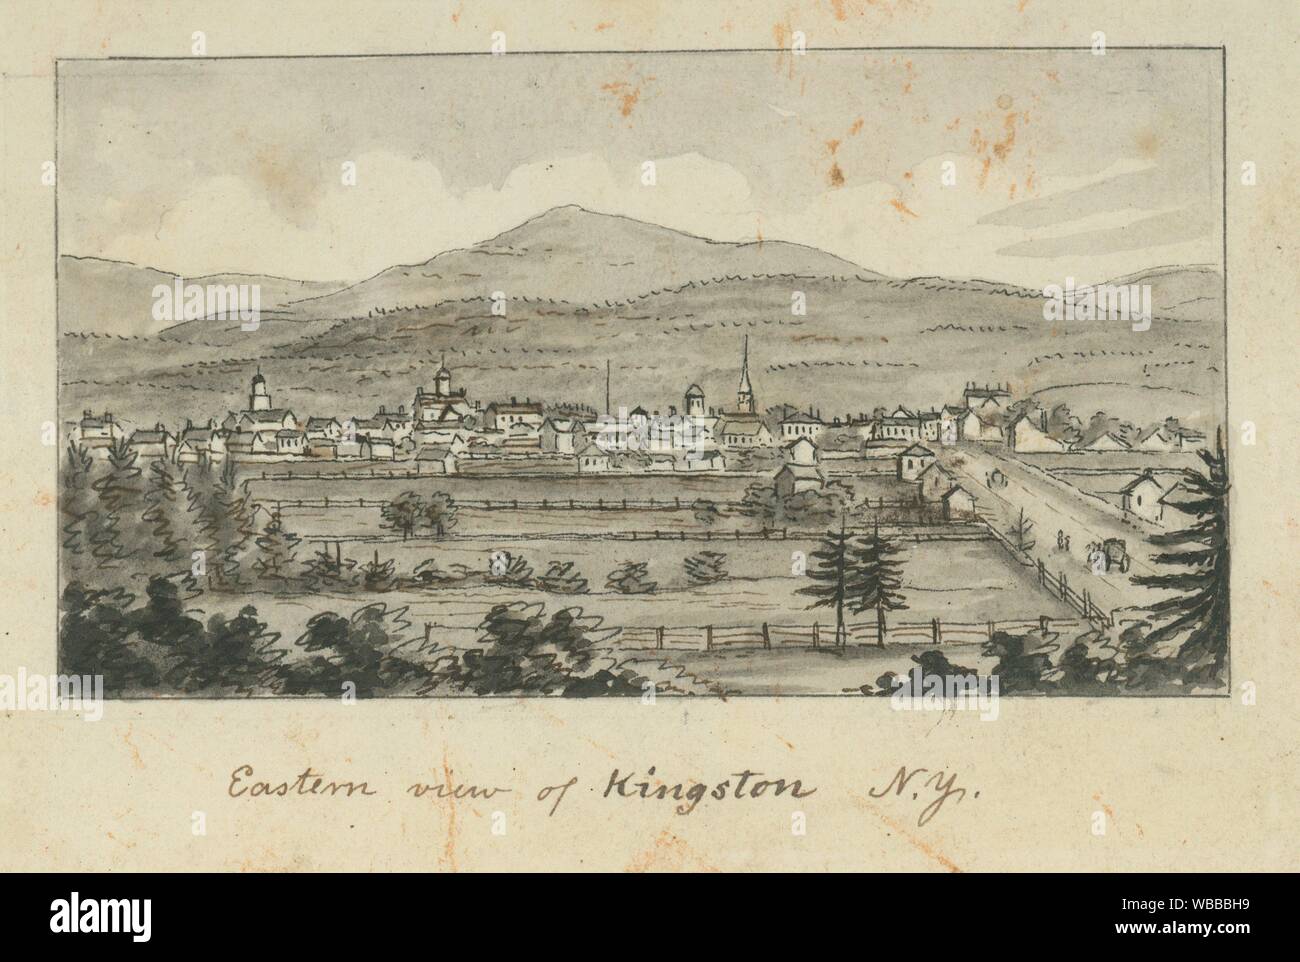 Eastern view of Kingston N.Y. Barber, John Warner (1798-1885) (Artist). I. N. Phelps Stokes Collection of American Historical Prints Individual Stock Photo